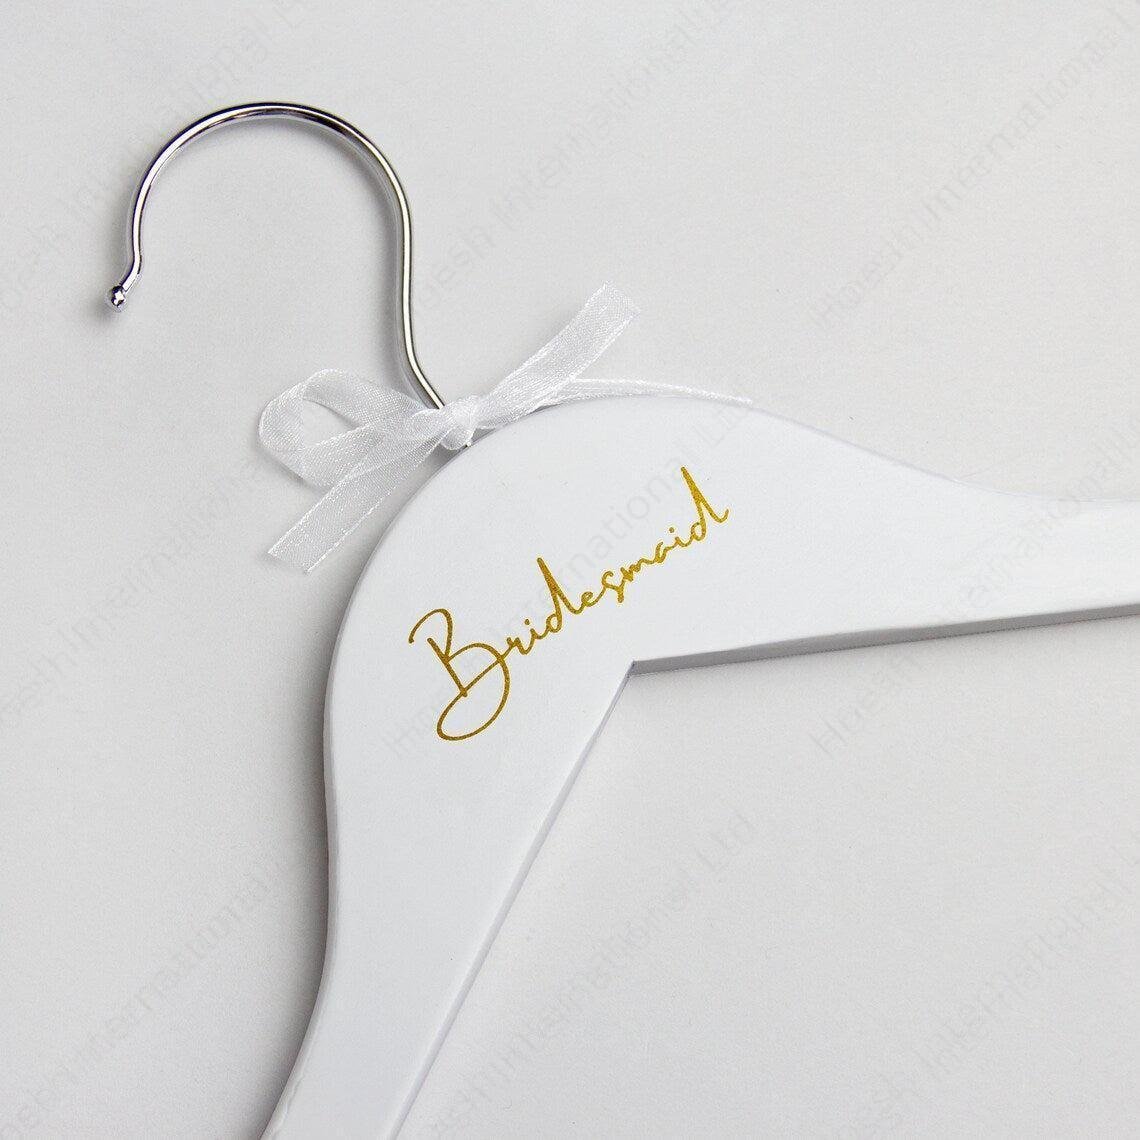 Personalised White Wooden Hanger Printed with BRIDE / BRIDESMAID - Hoesh International Ltd